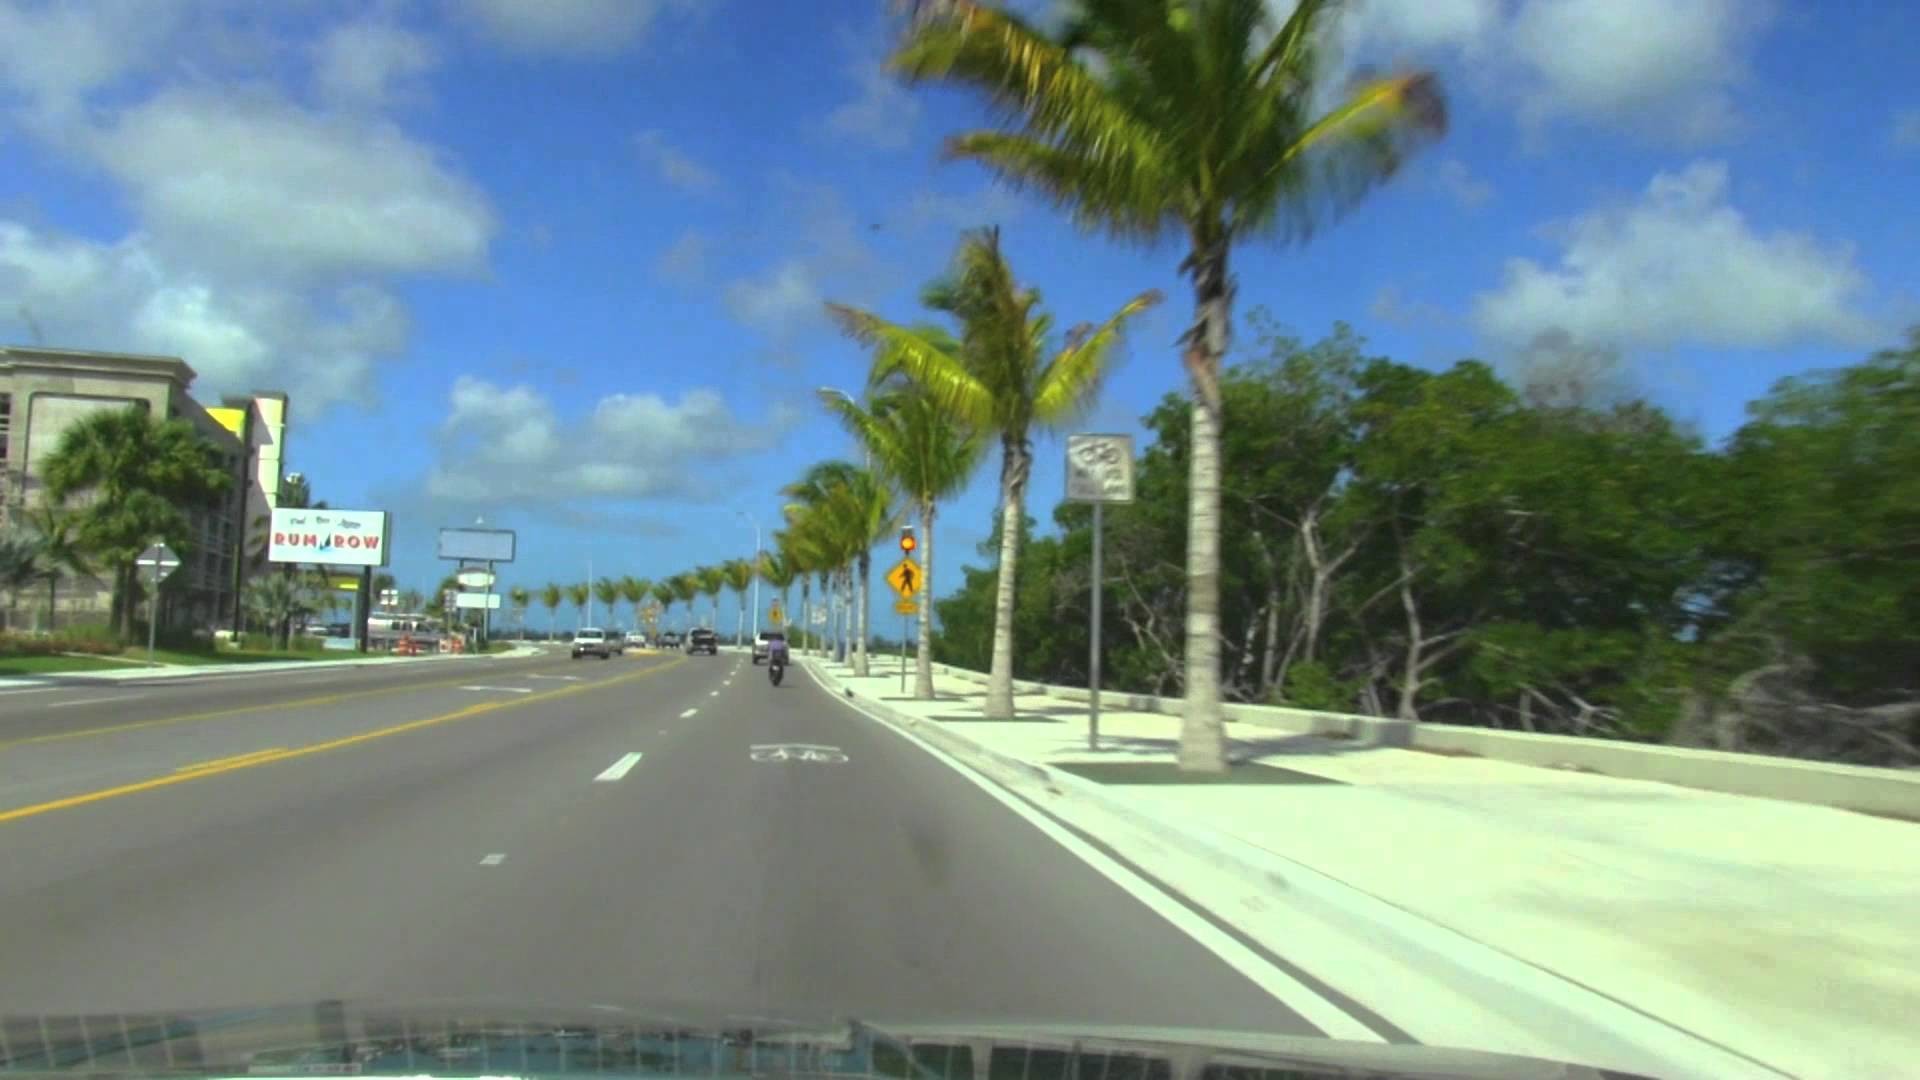 1920x1080 CRUIZIN' FLORIDAS' SCENIC HIGHWAY 1 * THE FLORIDA KEYS * MARCH 2015 * 1080p  - YouTube